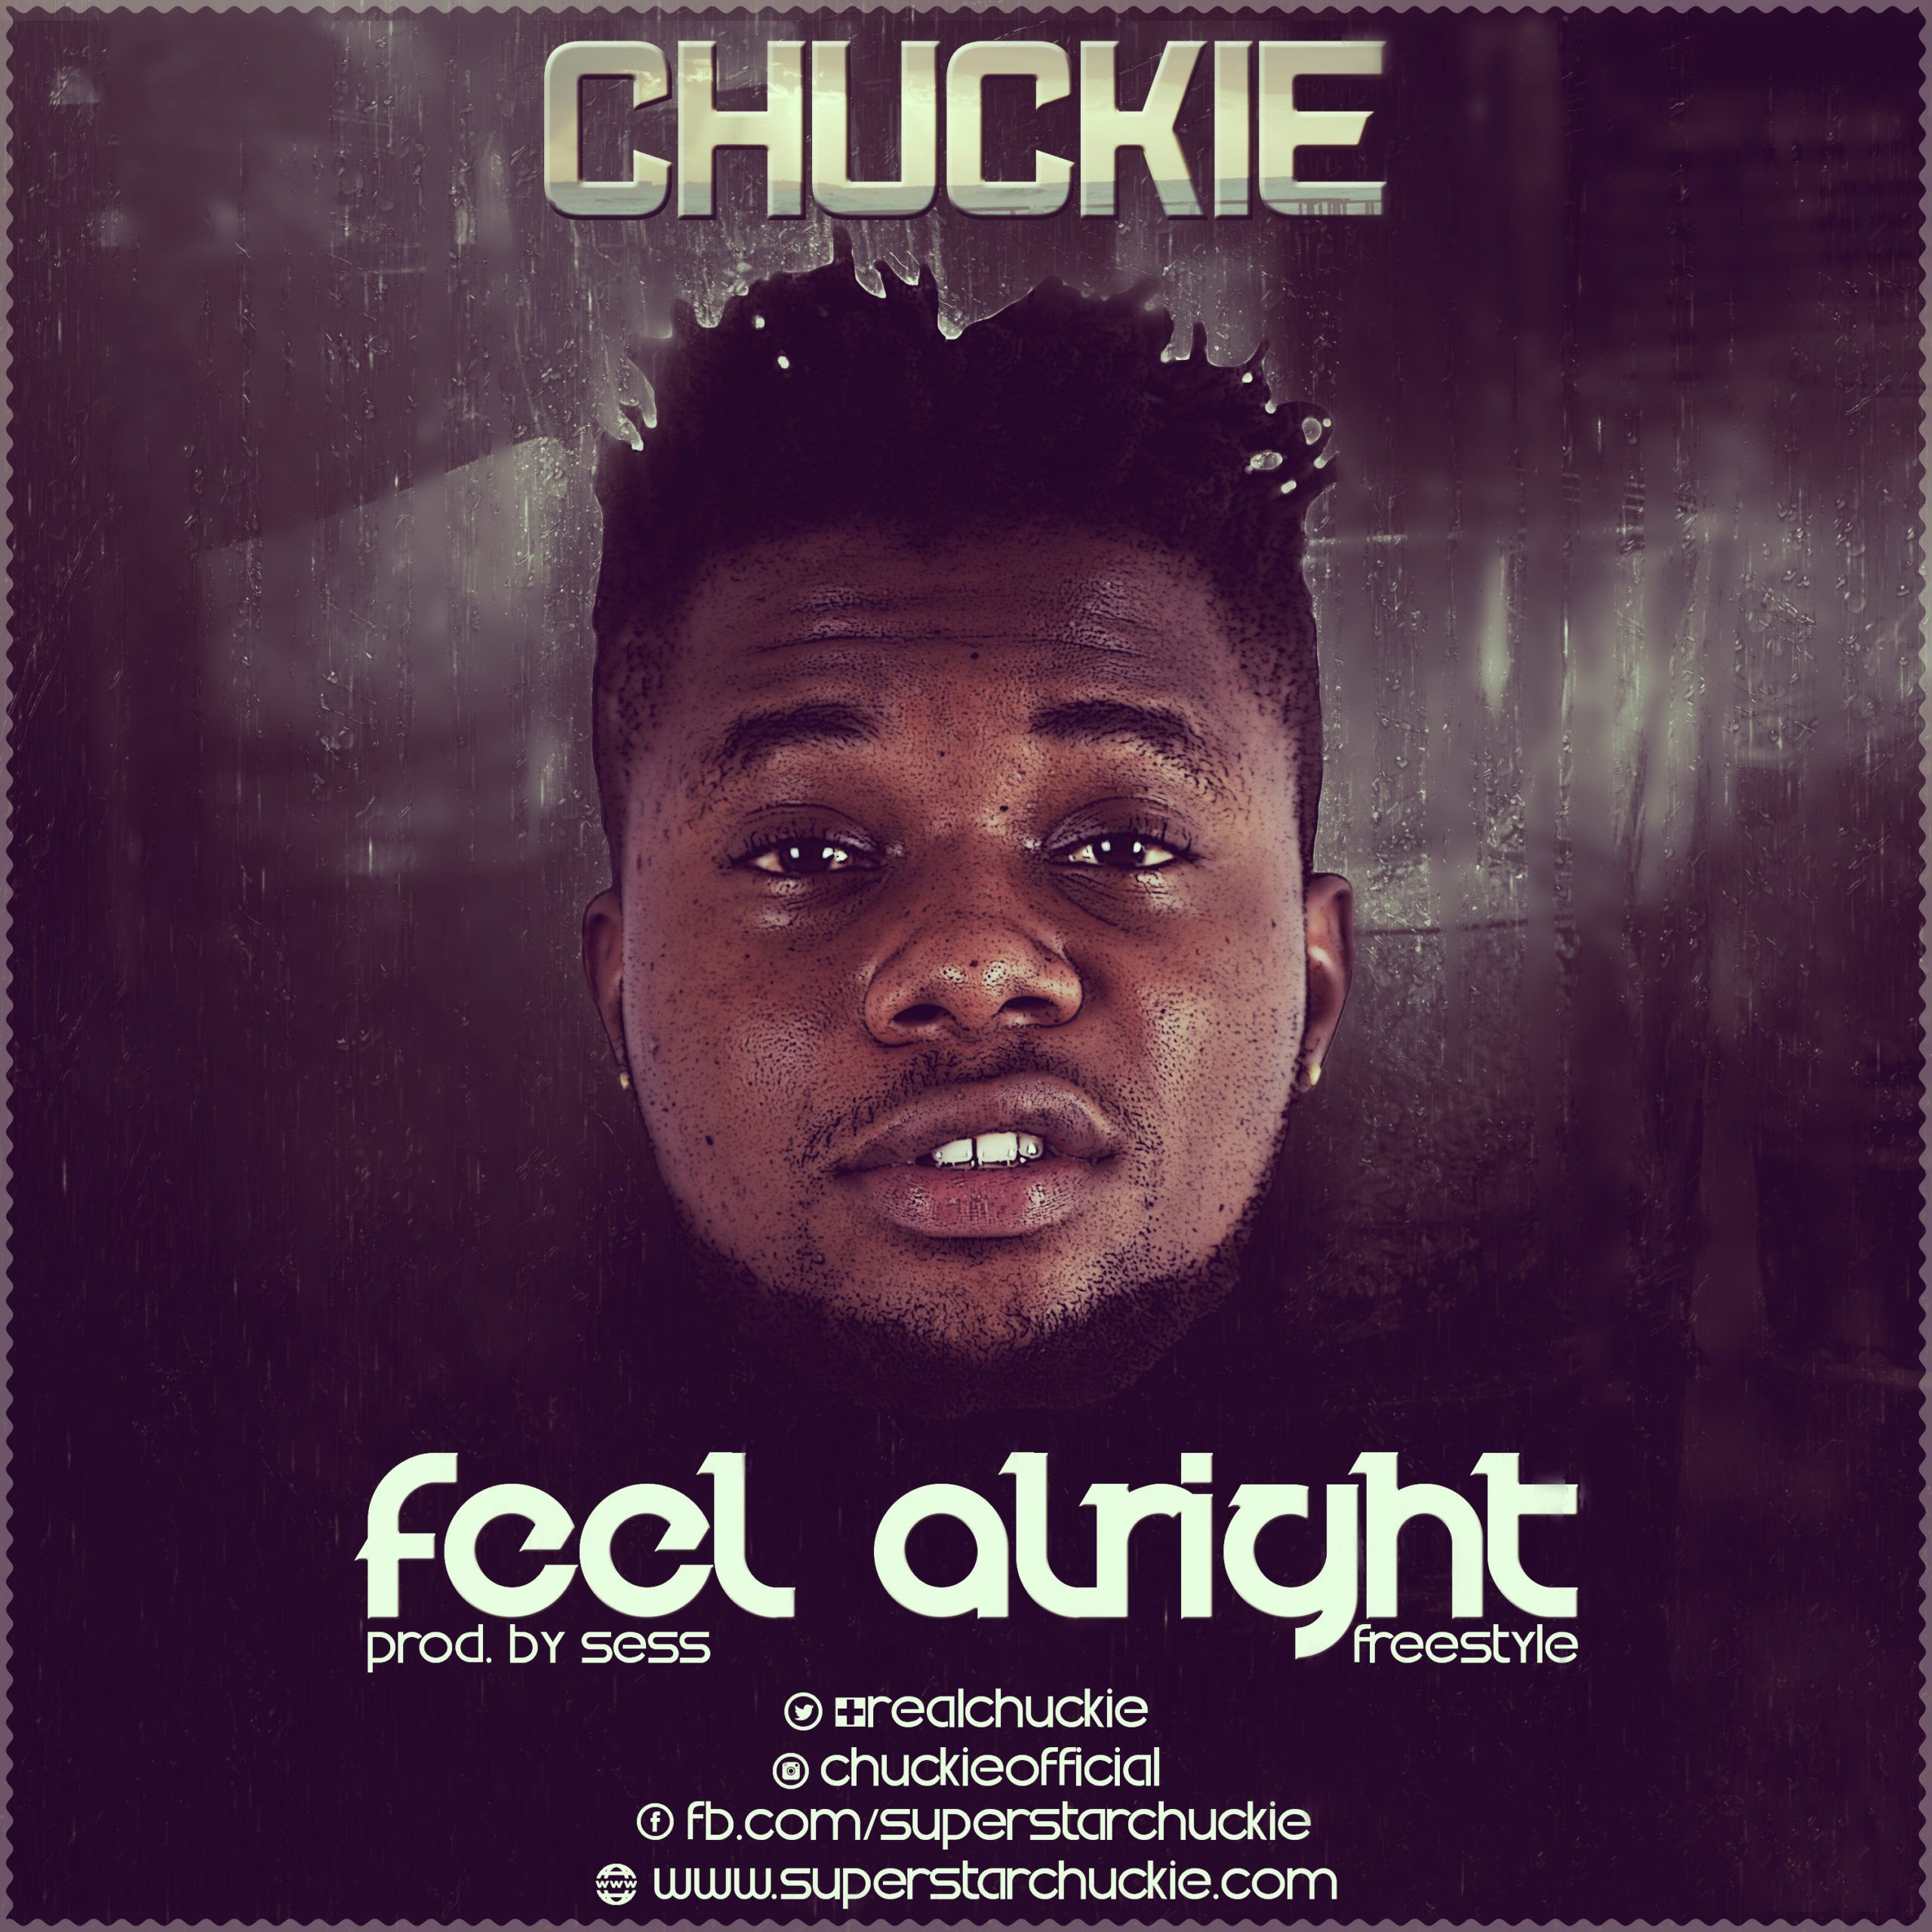 Chuckie - FEEL ALRIGHT Freestyle (prod. by Sess) Artwork | AceWorldTeam.com